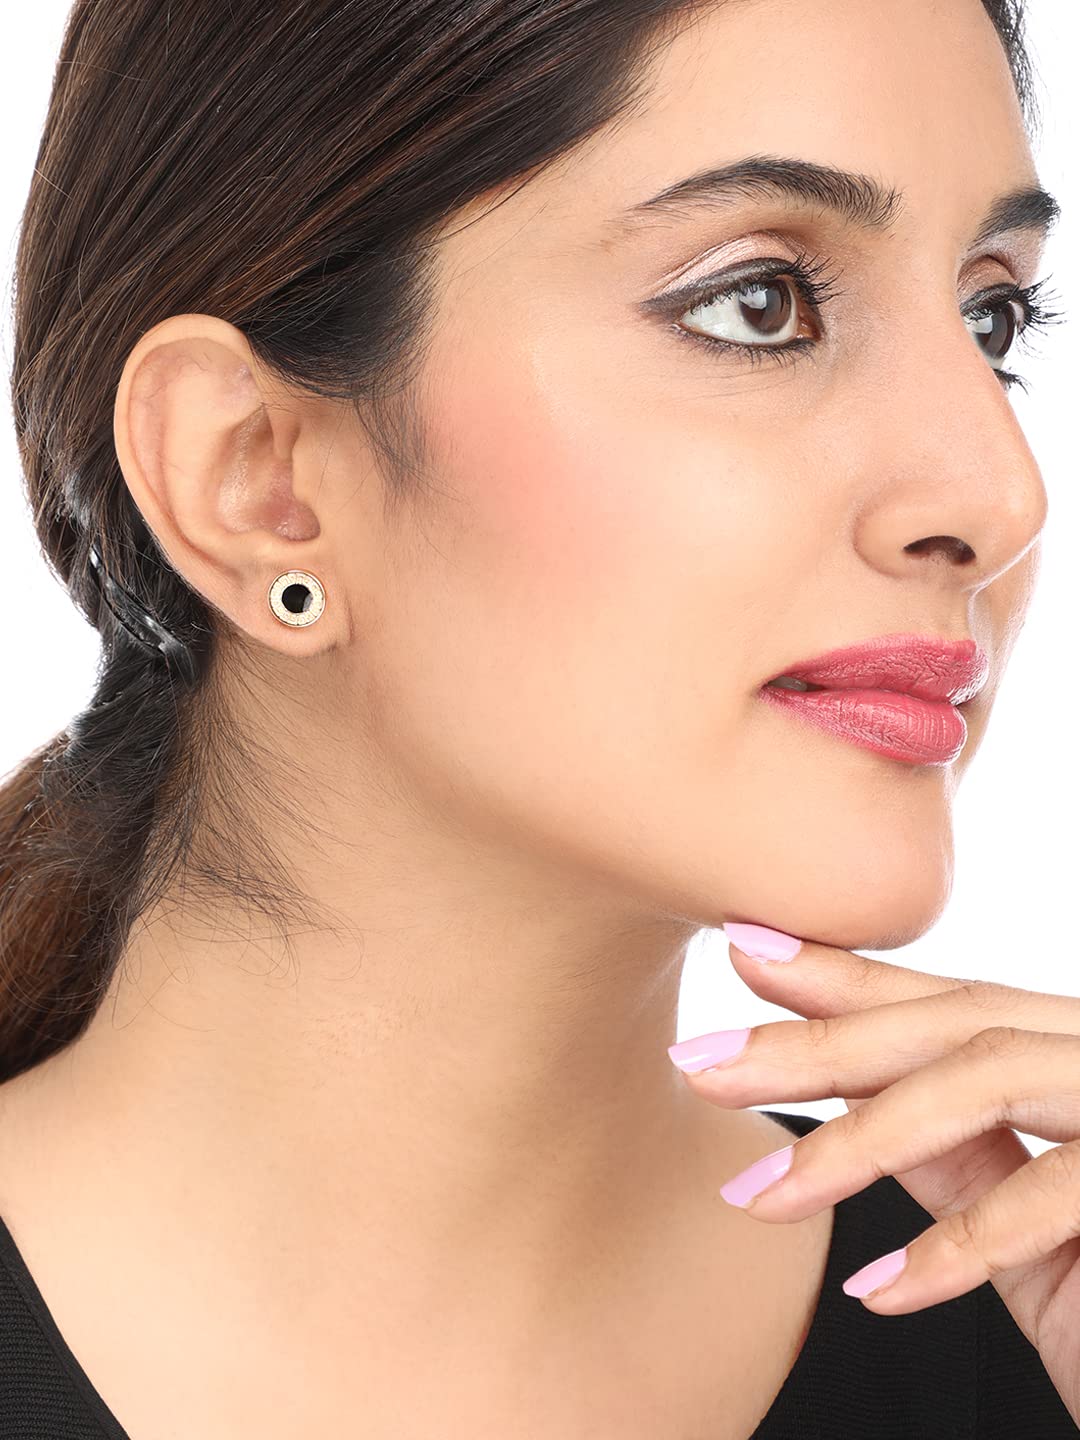 Jewelery Mens Earrings  Womens Earrings Stainless Steel Black Silver  Black Gold Piercing Screw Earring Stud